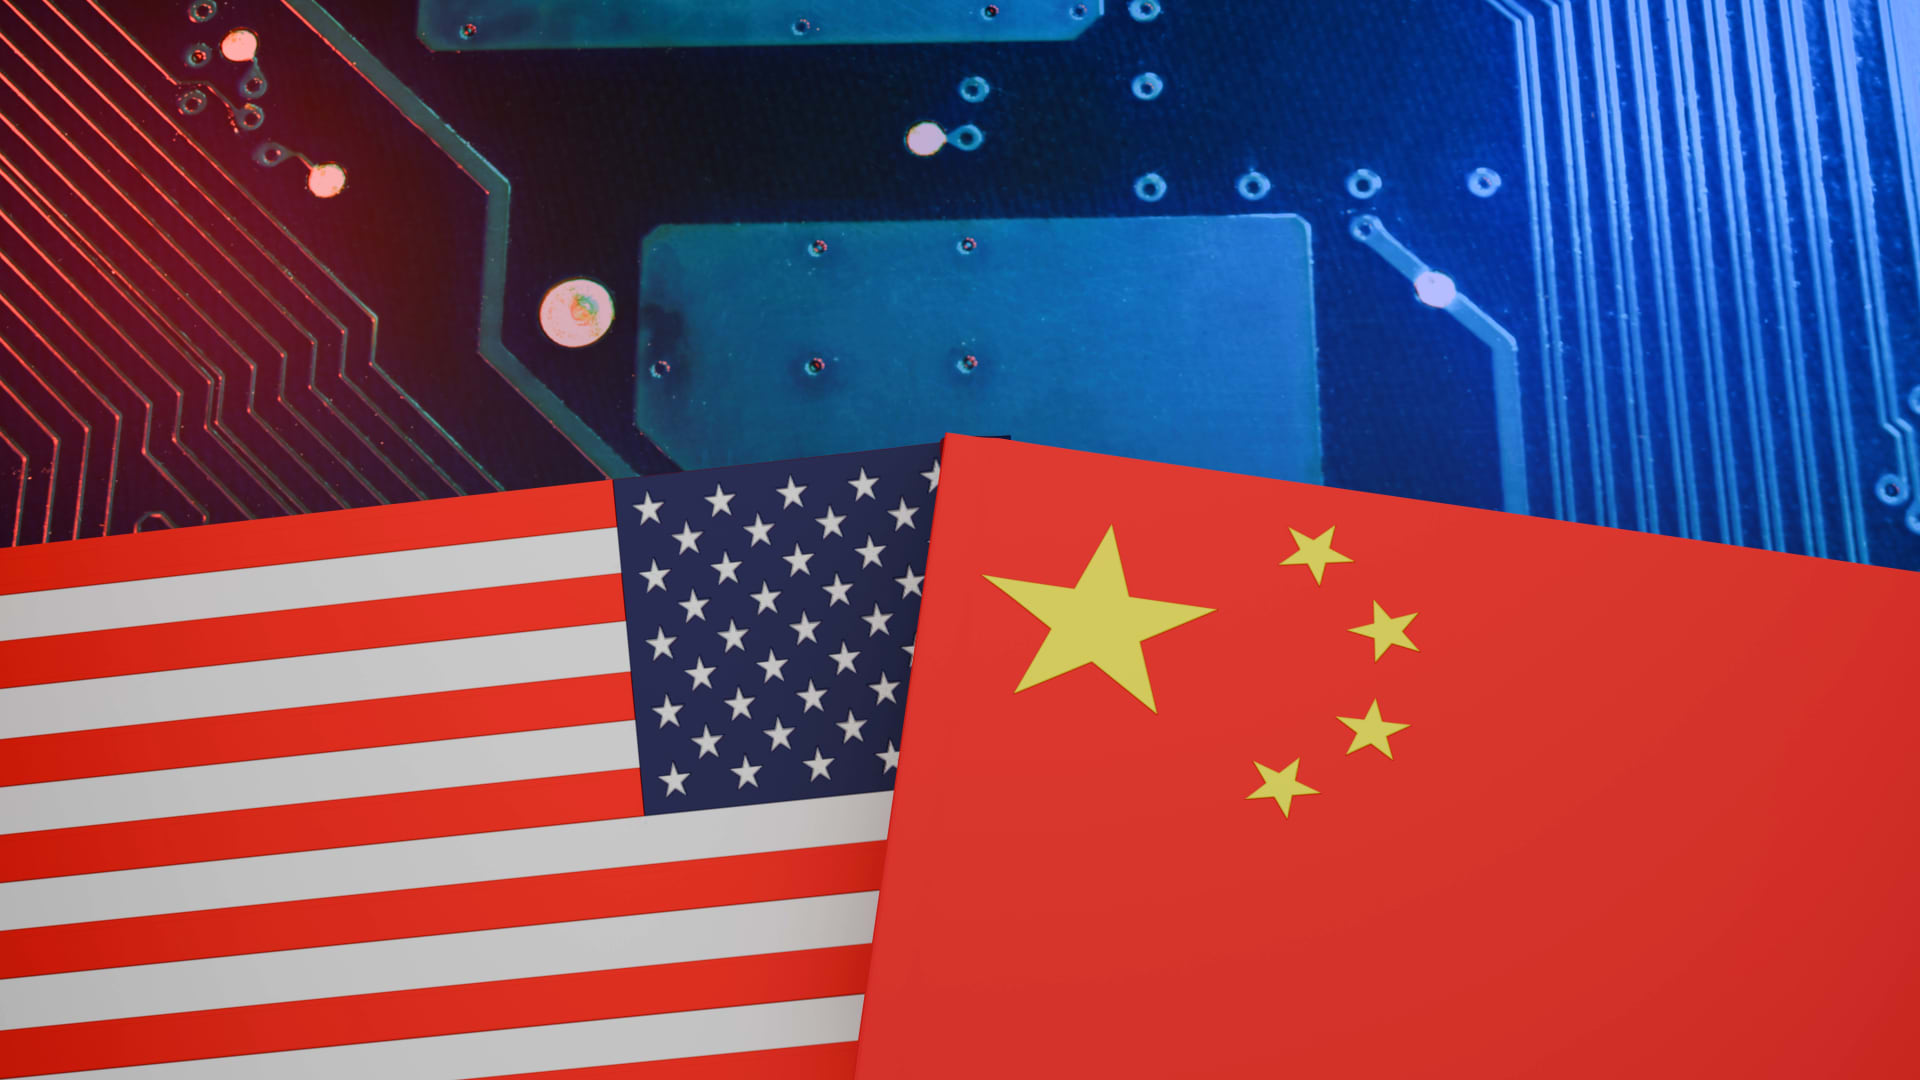 China's .5 billion chip fund will likely focus on AI amid U.S. export curbs, NYU professor says